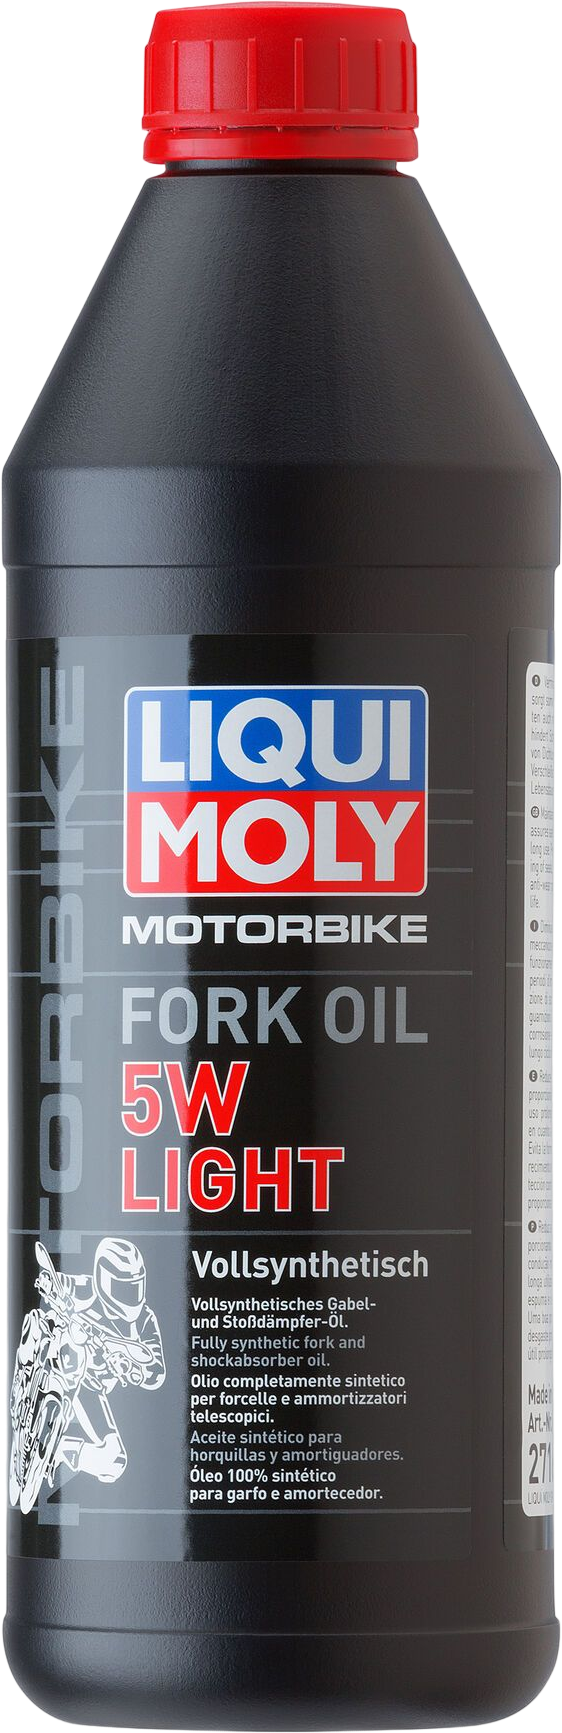 Liqui Moly Motorbike Fork Oil 5W light, 1 lt